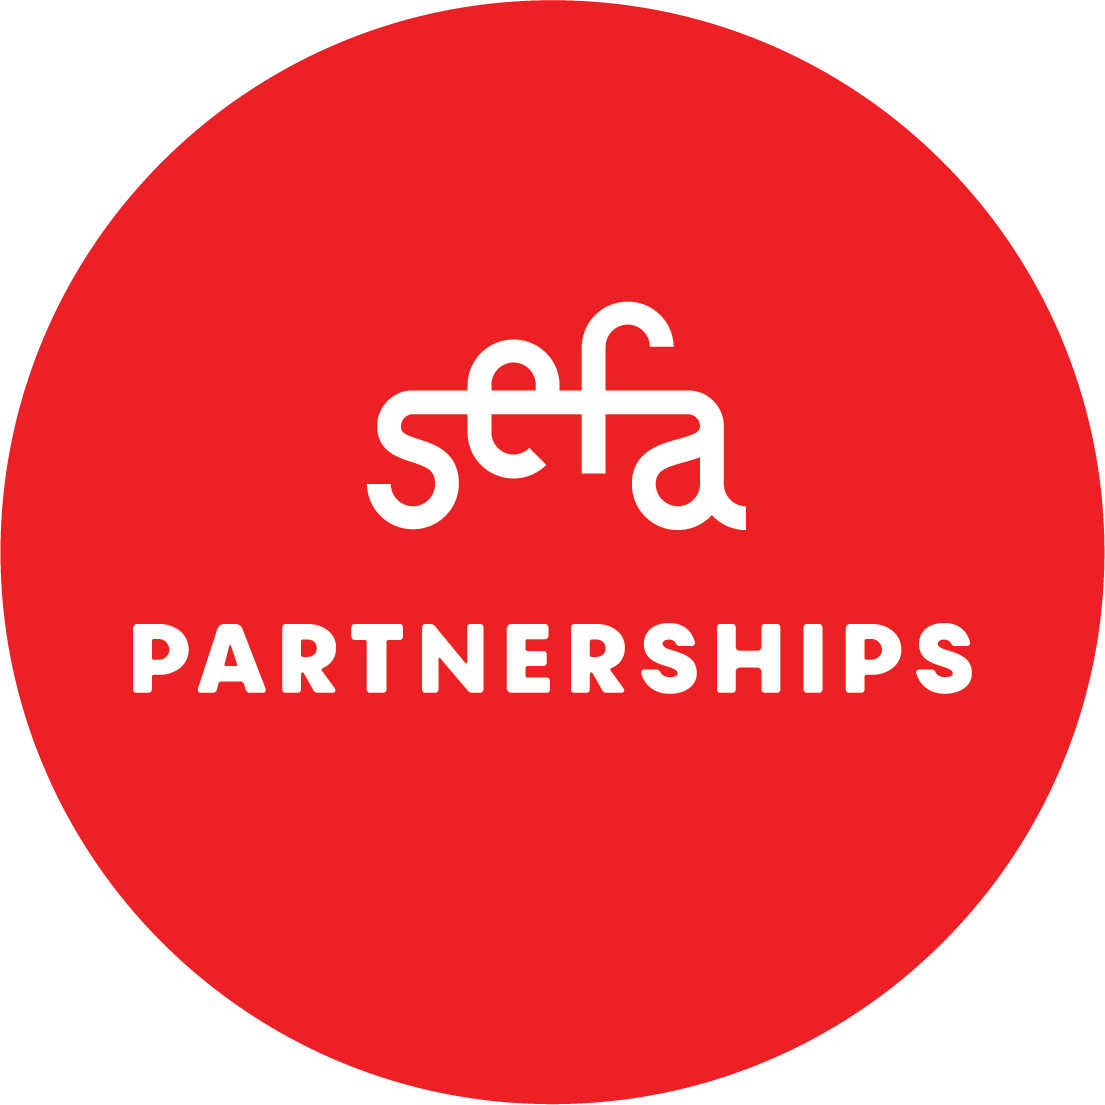 Sefa Partnerships